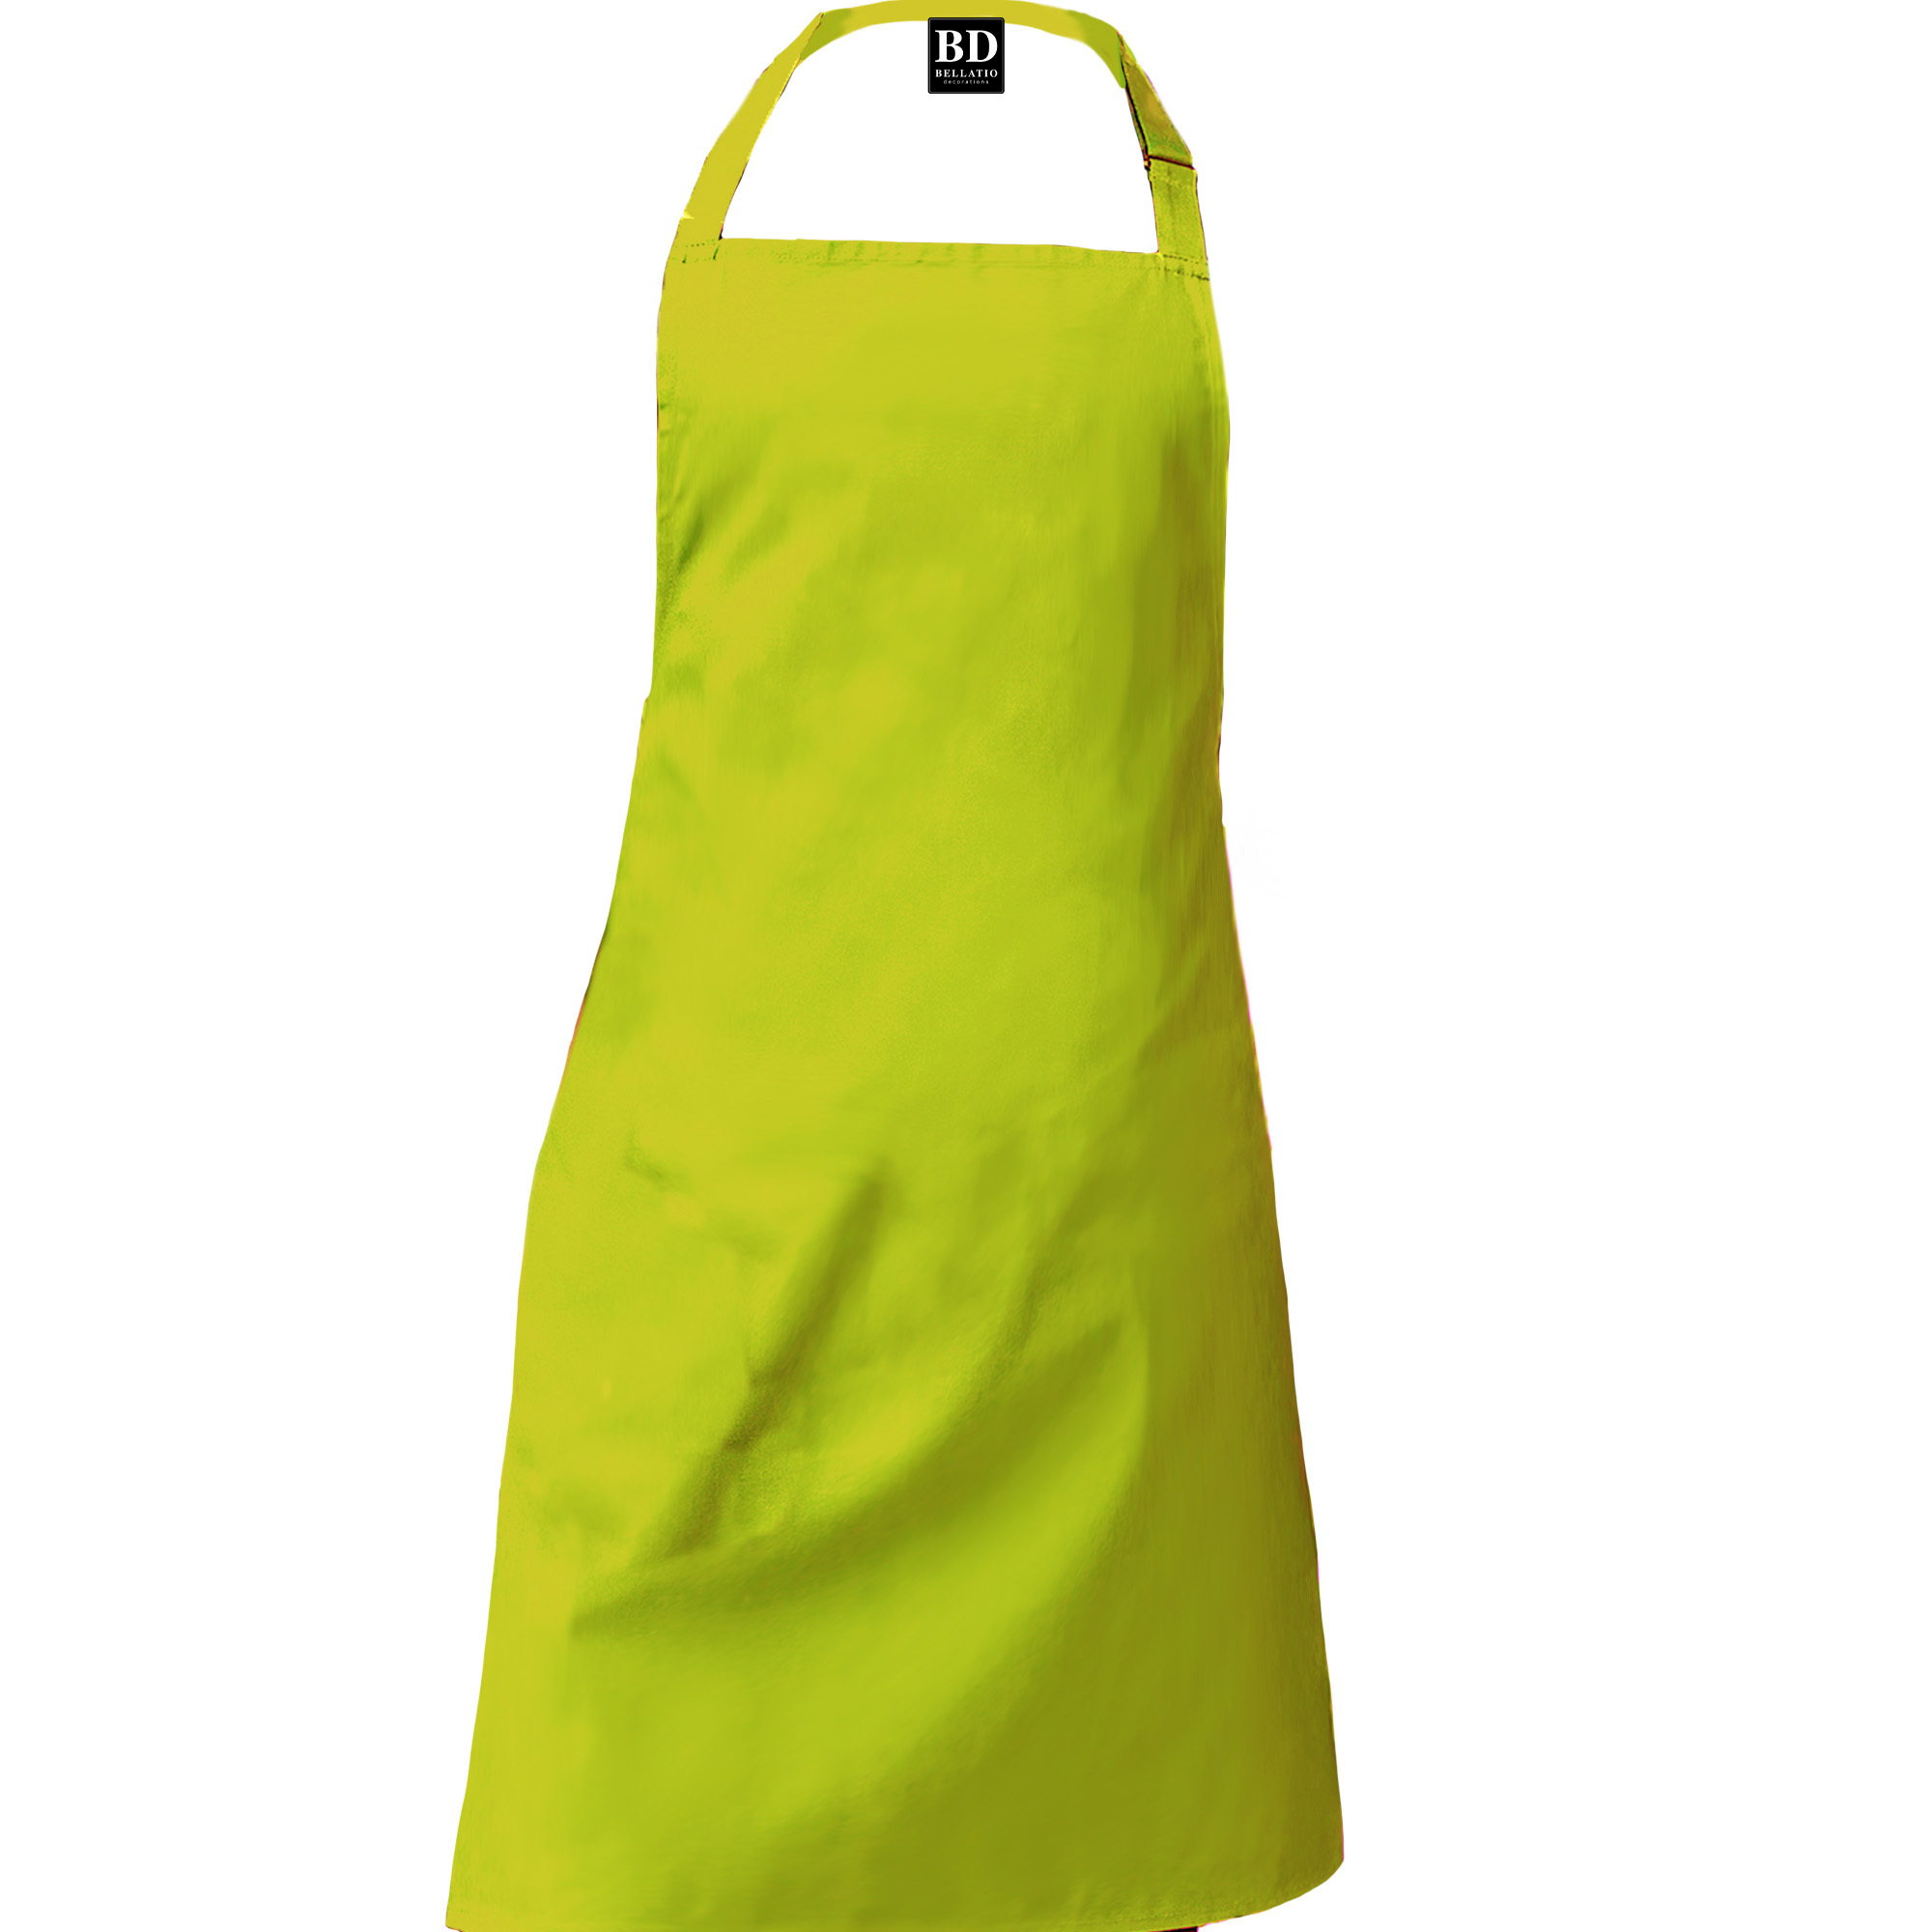 Chef kok barbeque schort / keukenschort lime groen dames